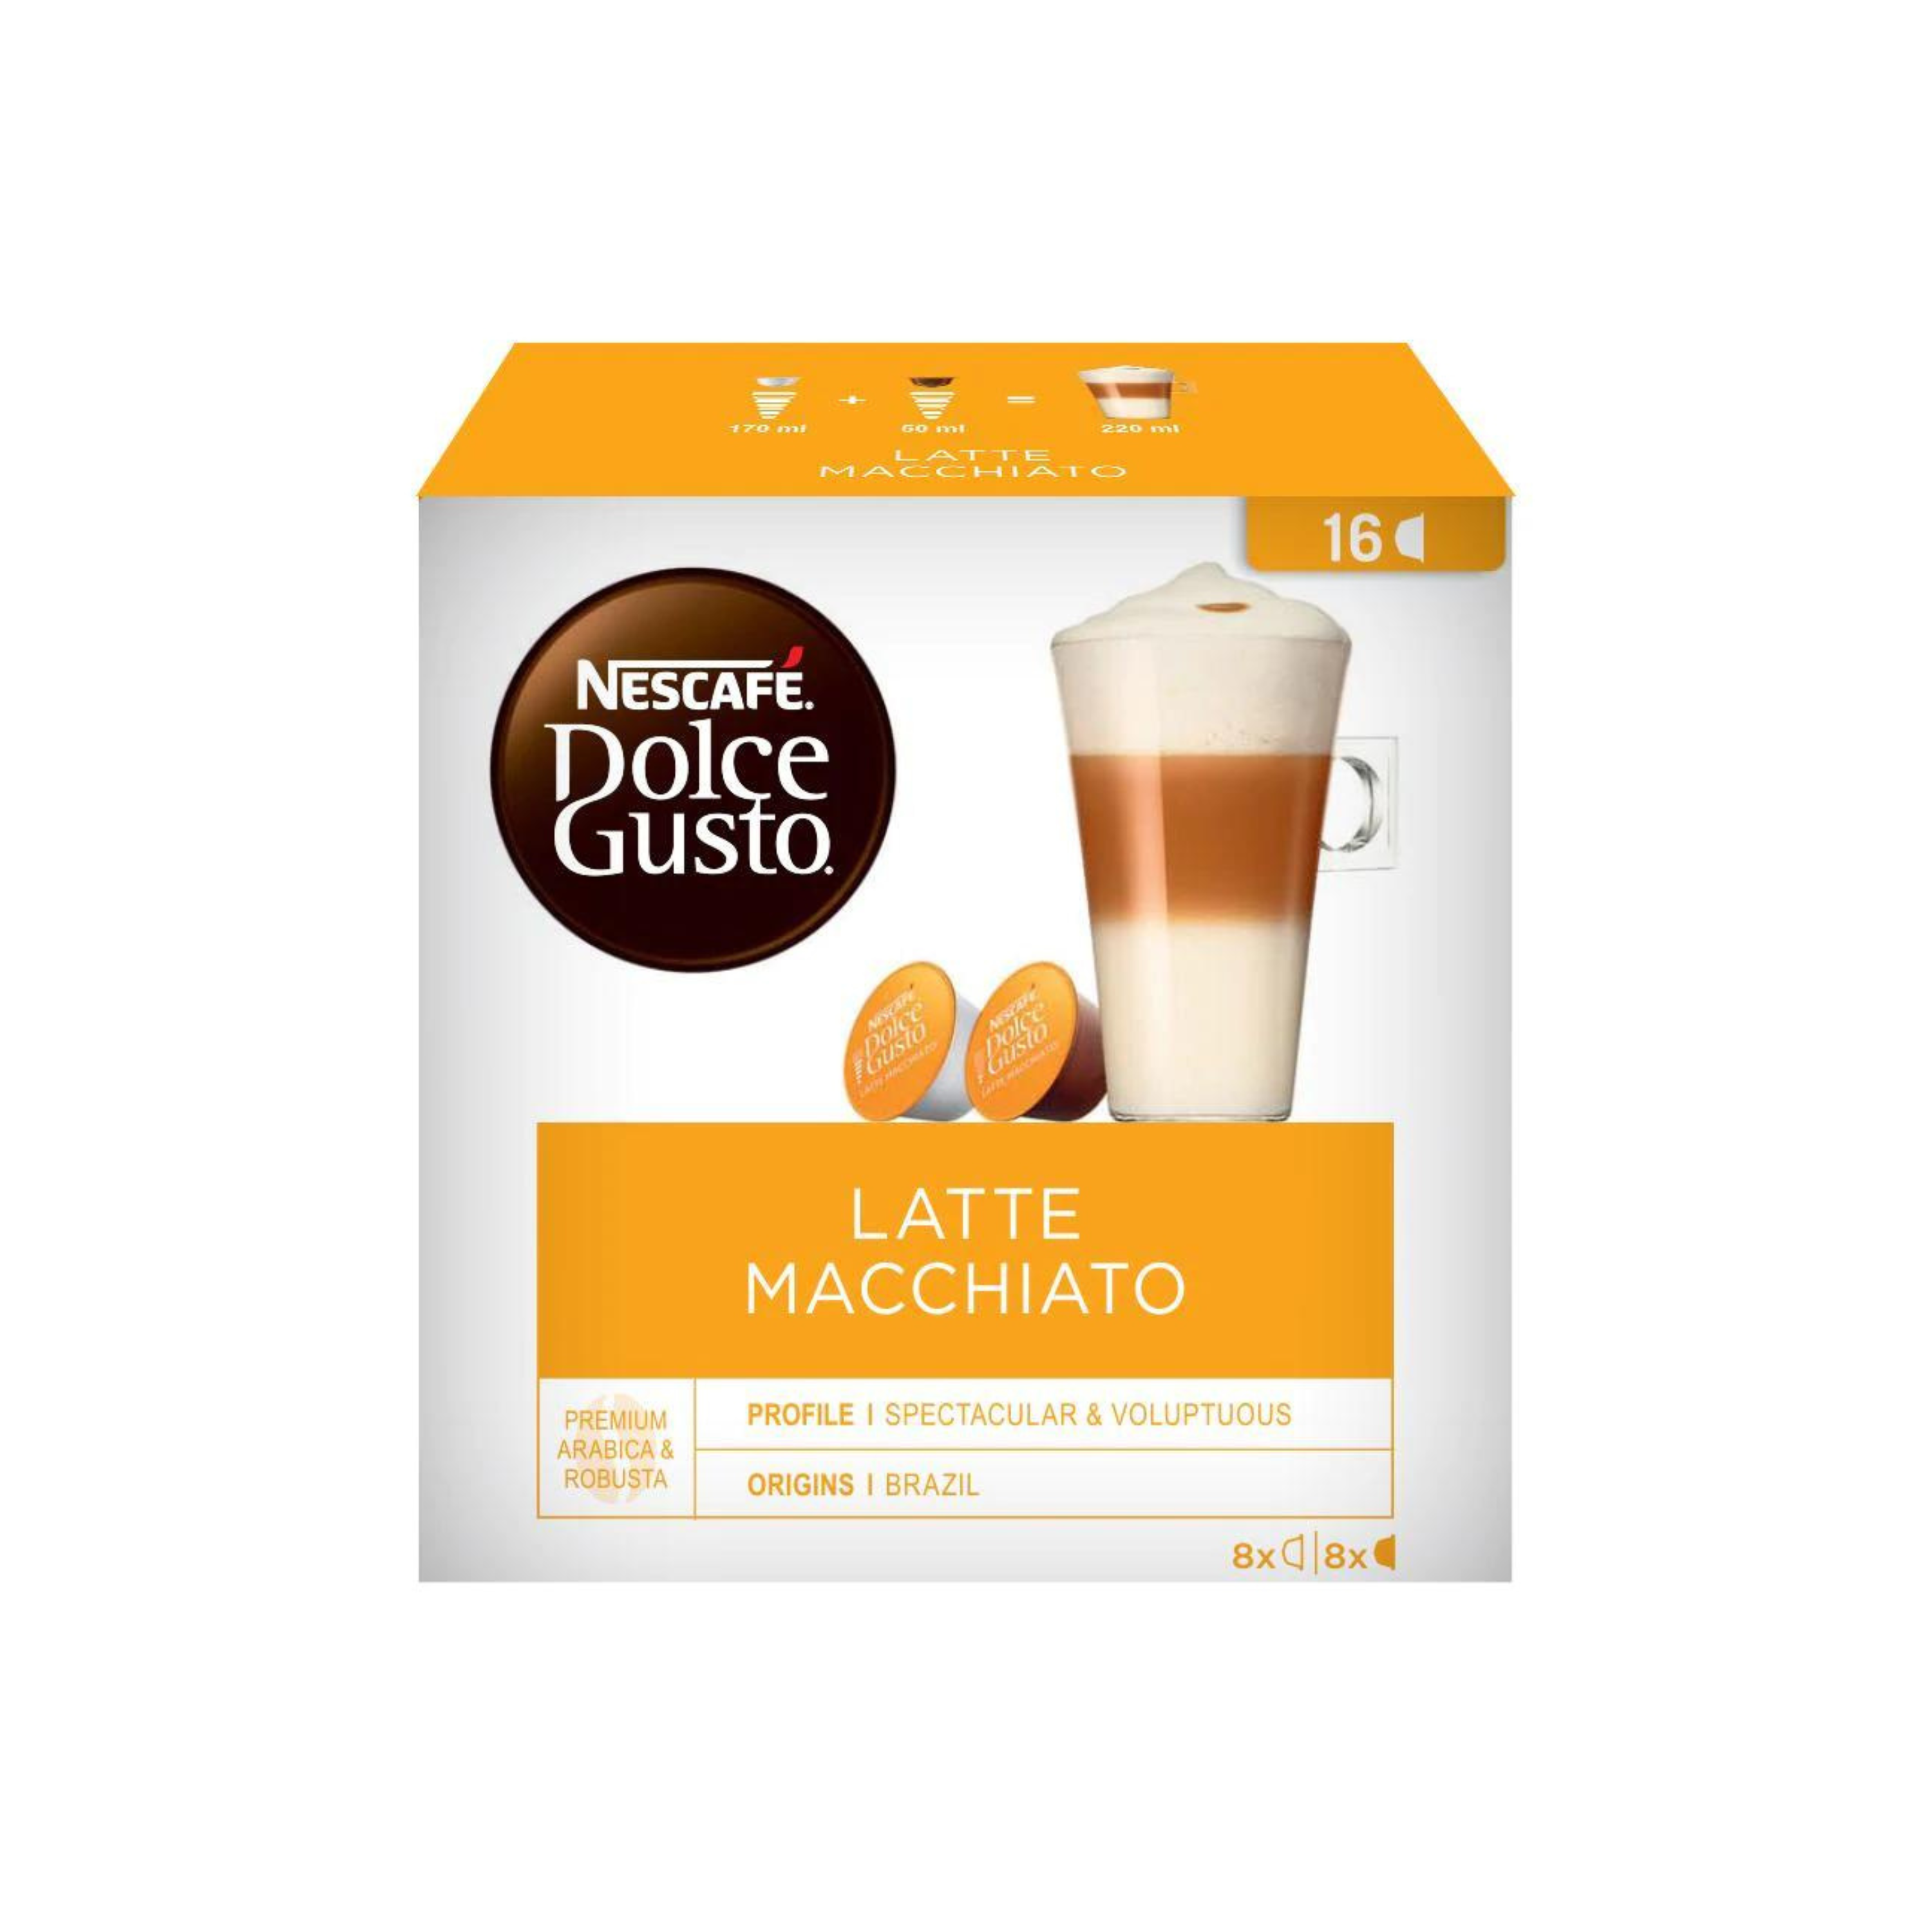 Nescafé Dolce Gusto Mochaccino Canela – Shop Nestlé Paraguay